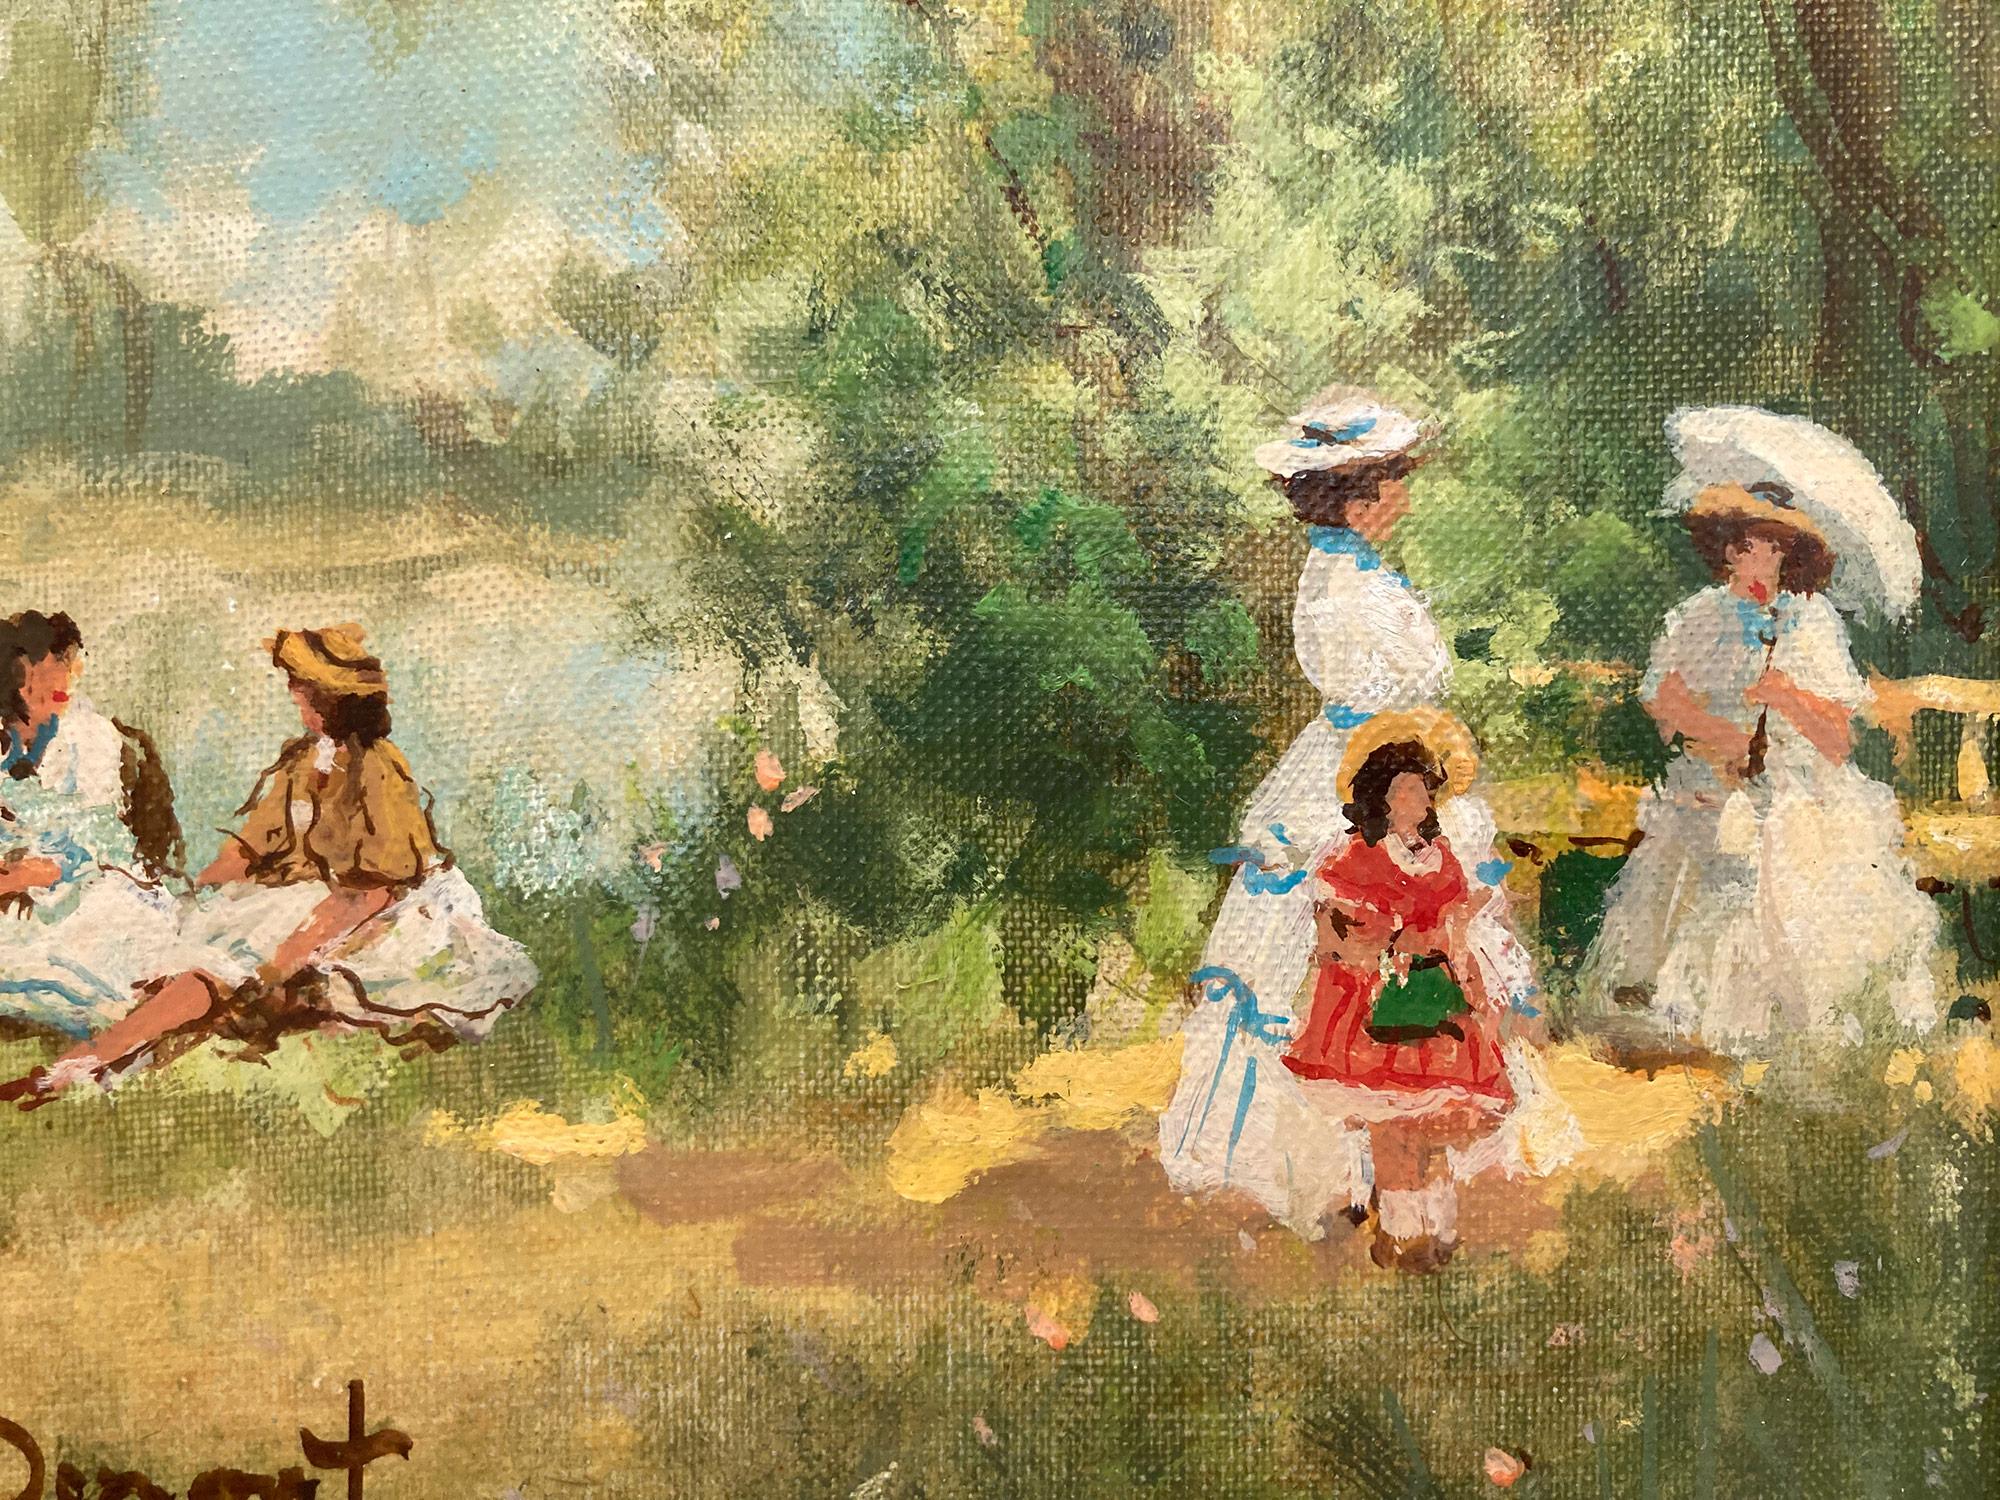 picnic scene painting